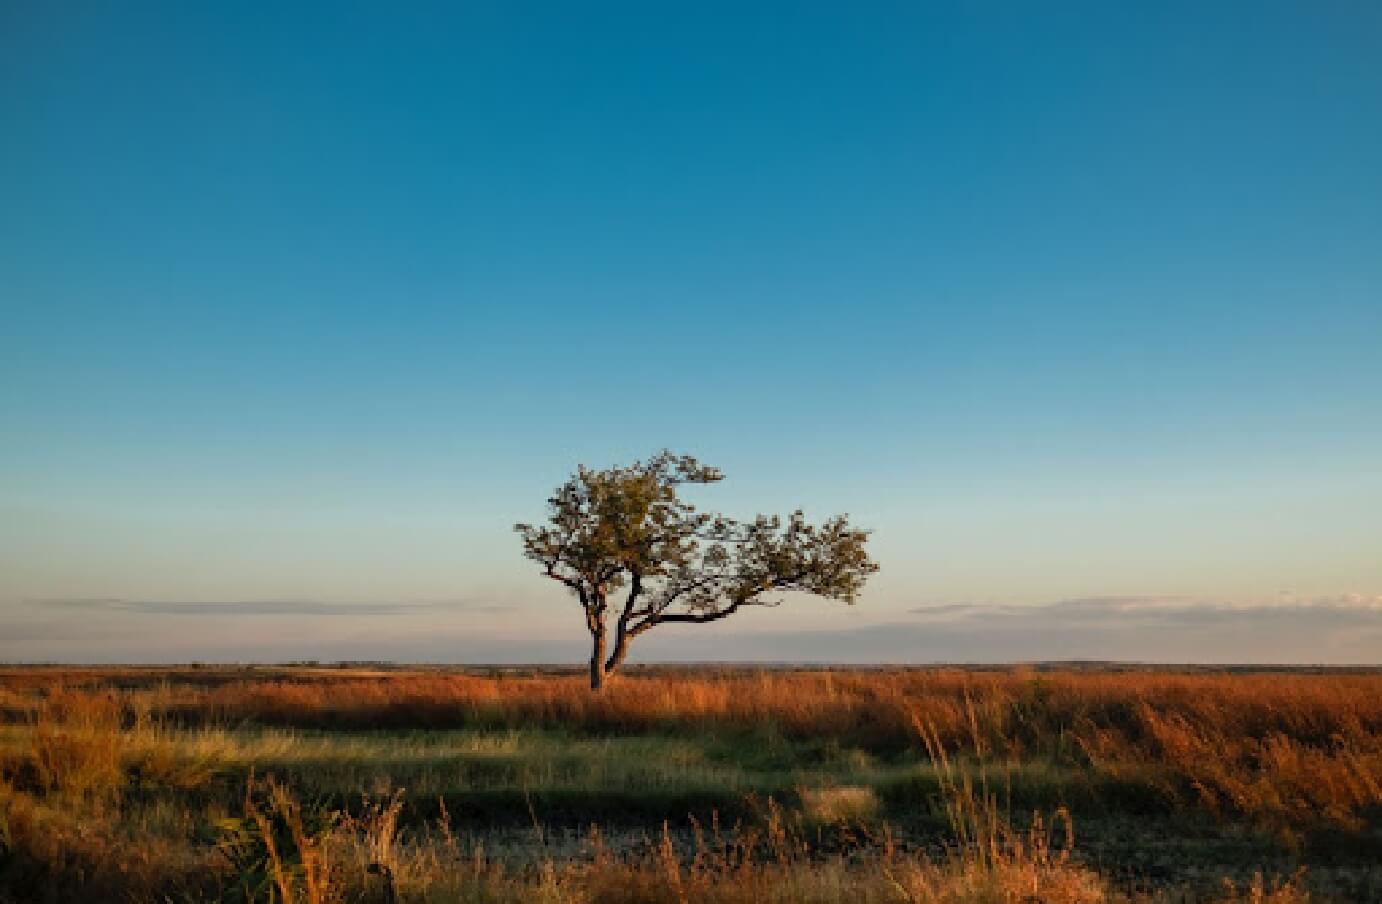 Scenic shot of a landscape in Madagascar